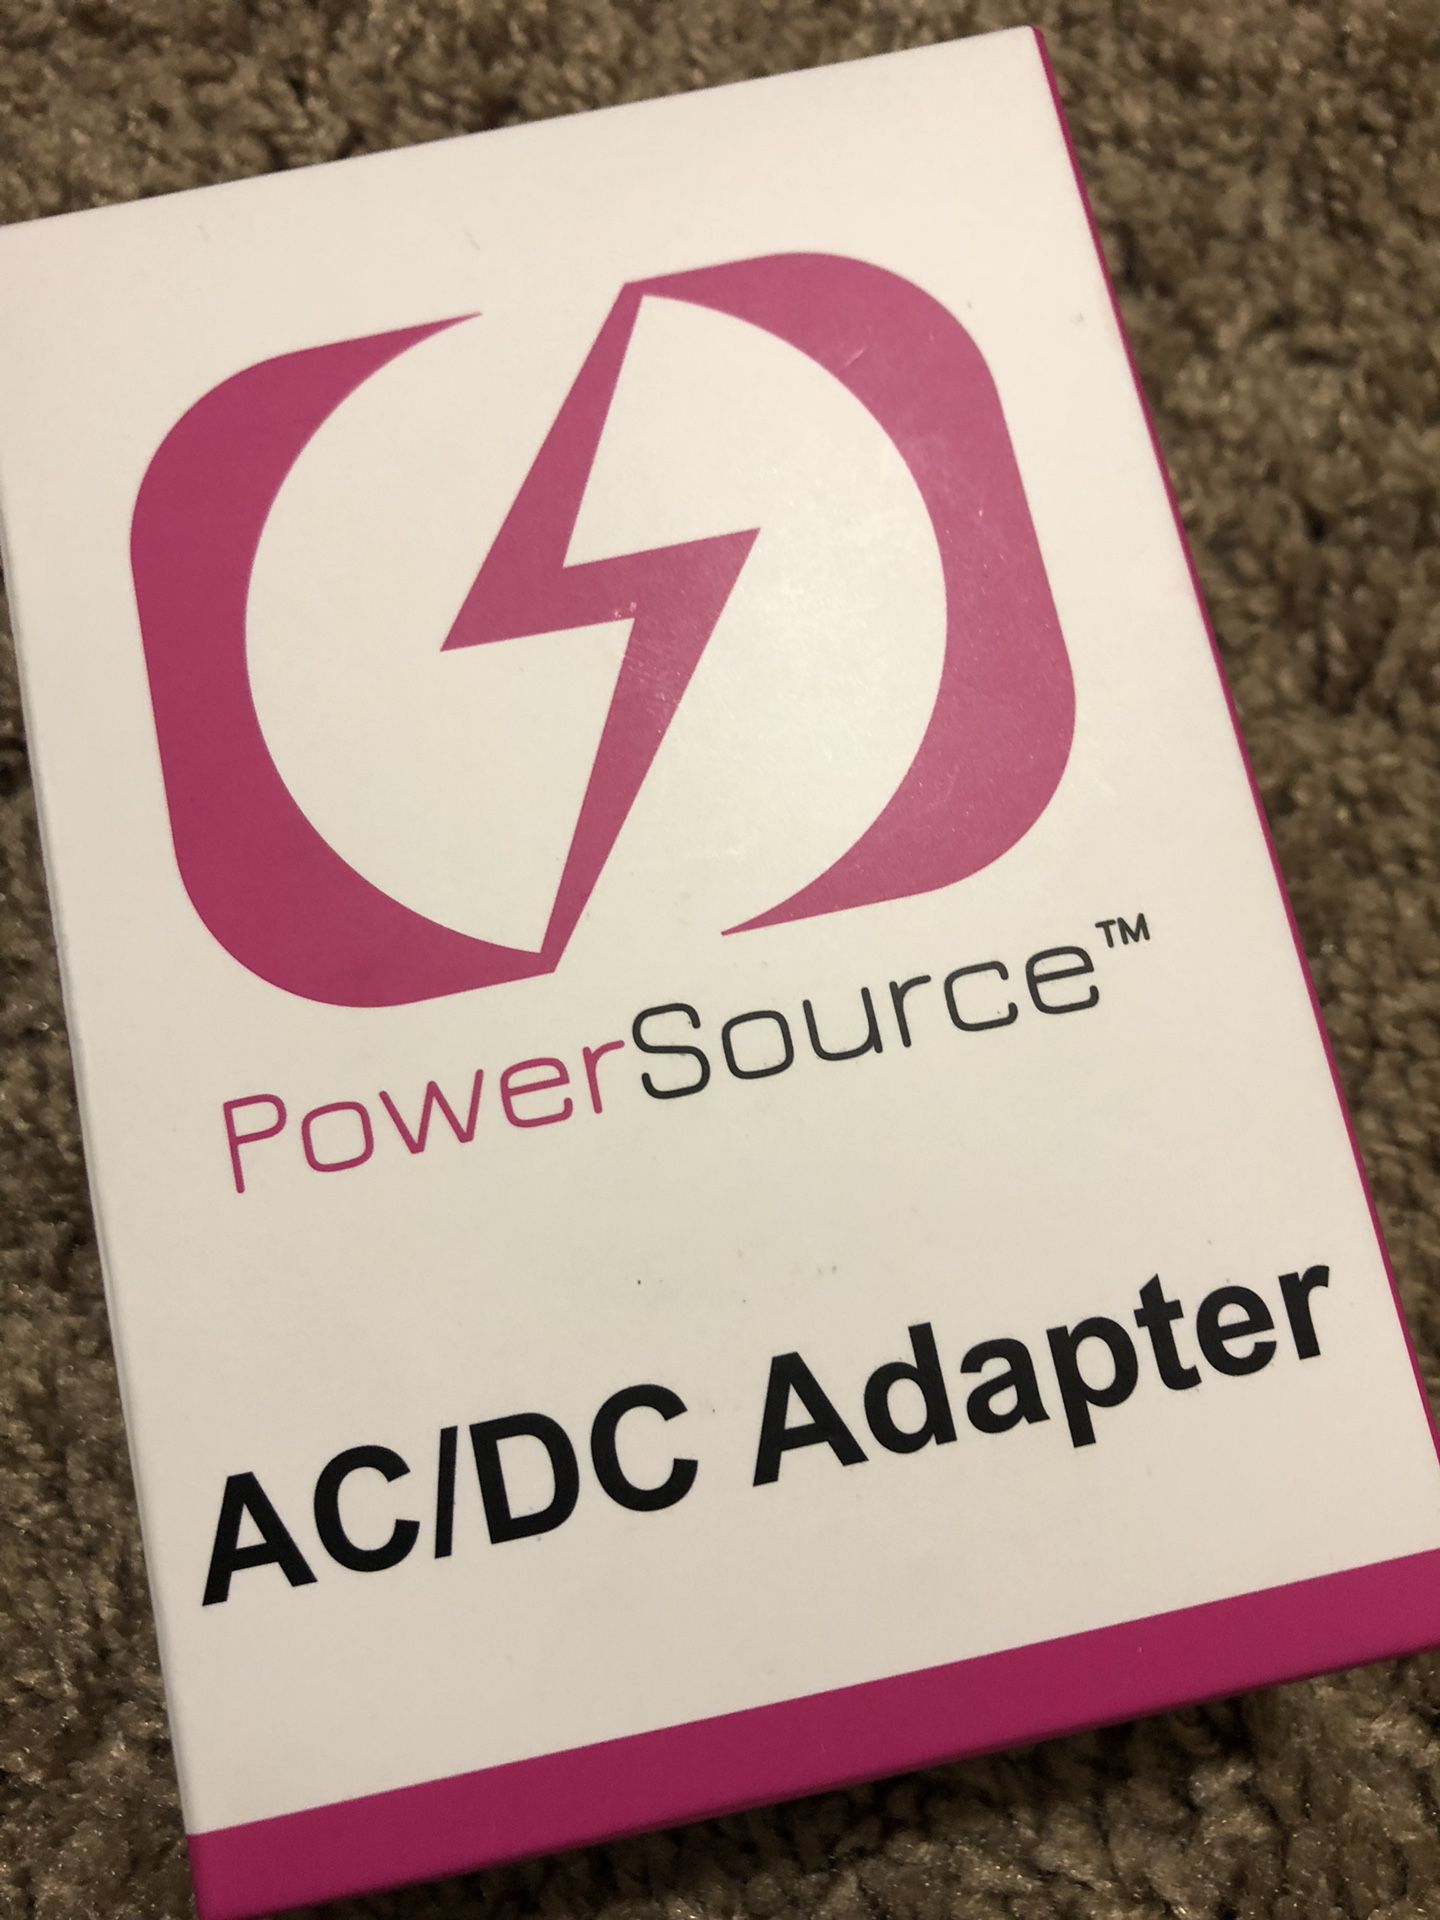 AC/DC Laptop Adapter 10$